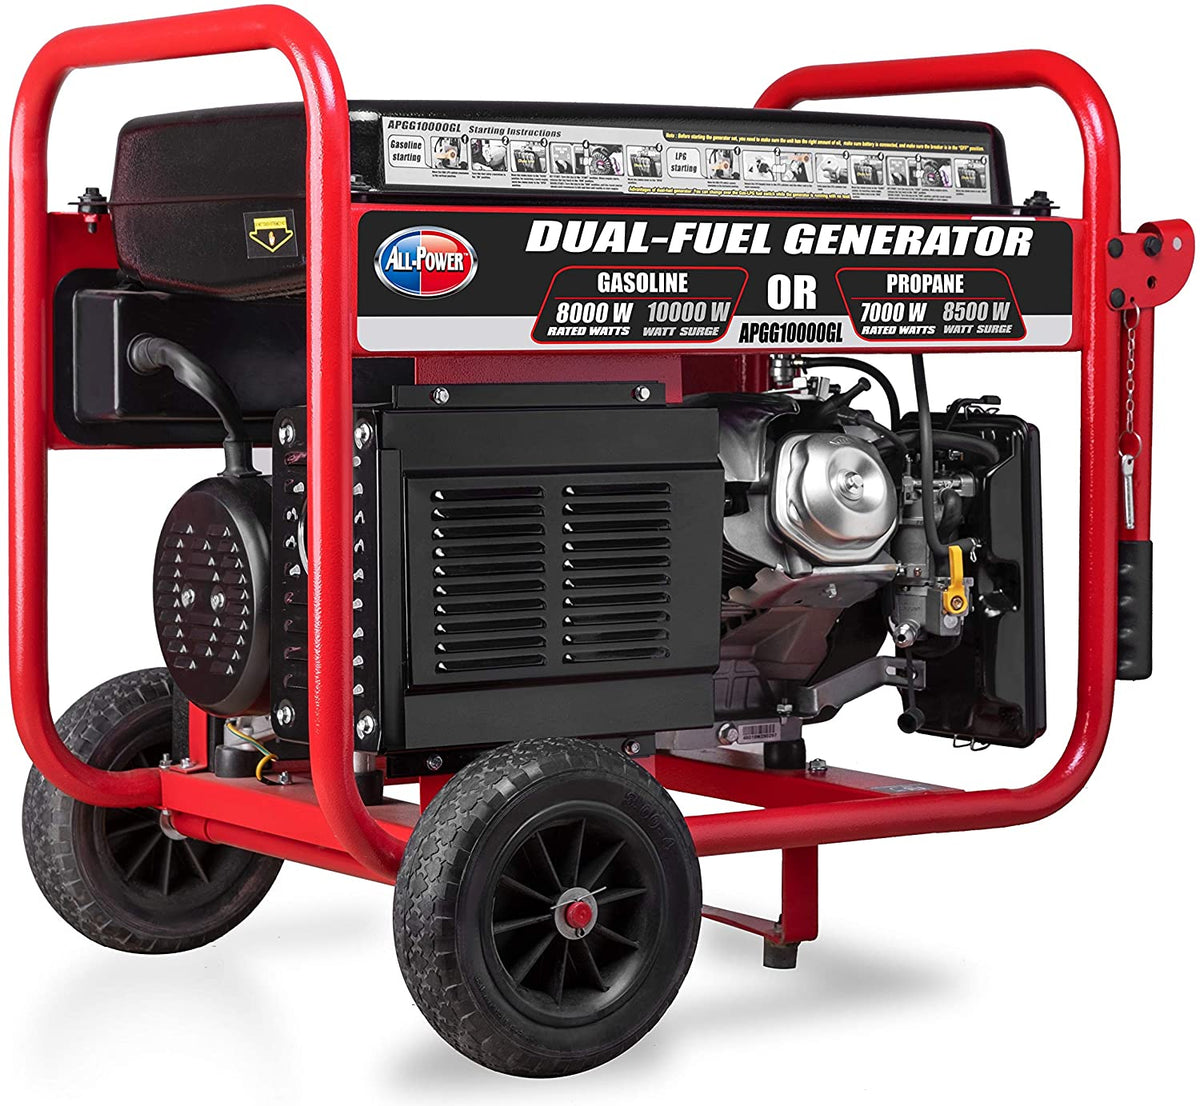 All Power America/Gentron APGG10000GL 8000W/10000W Electric Start Dual Fuel Generator New